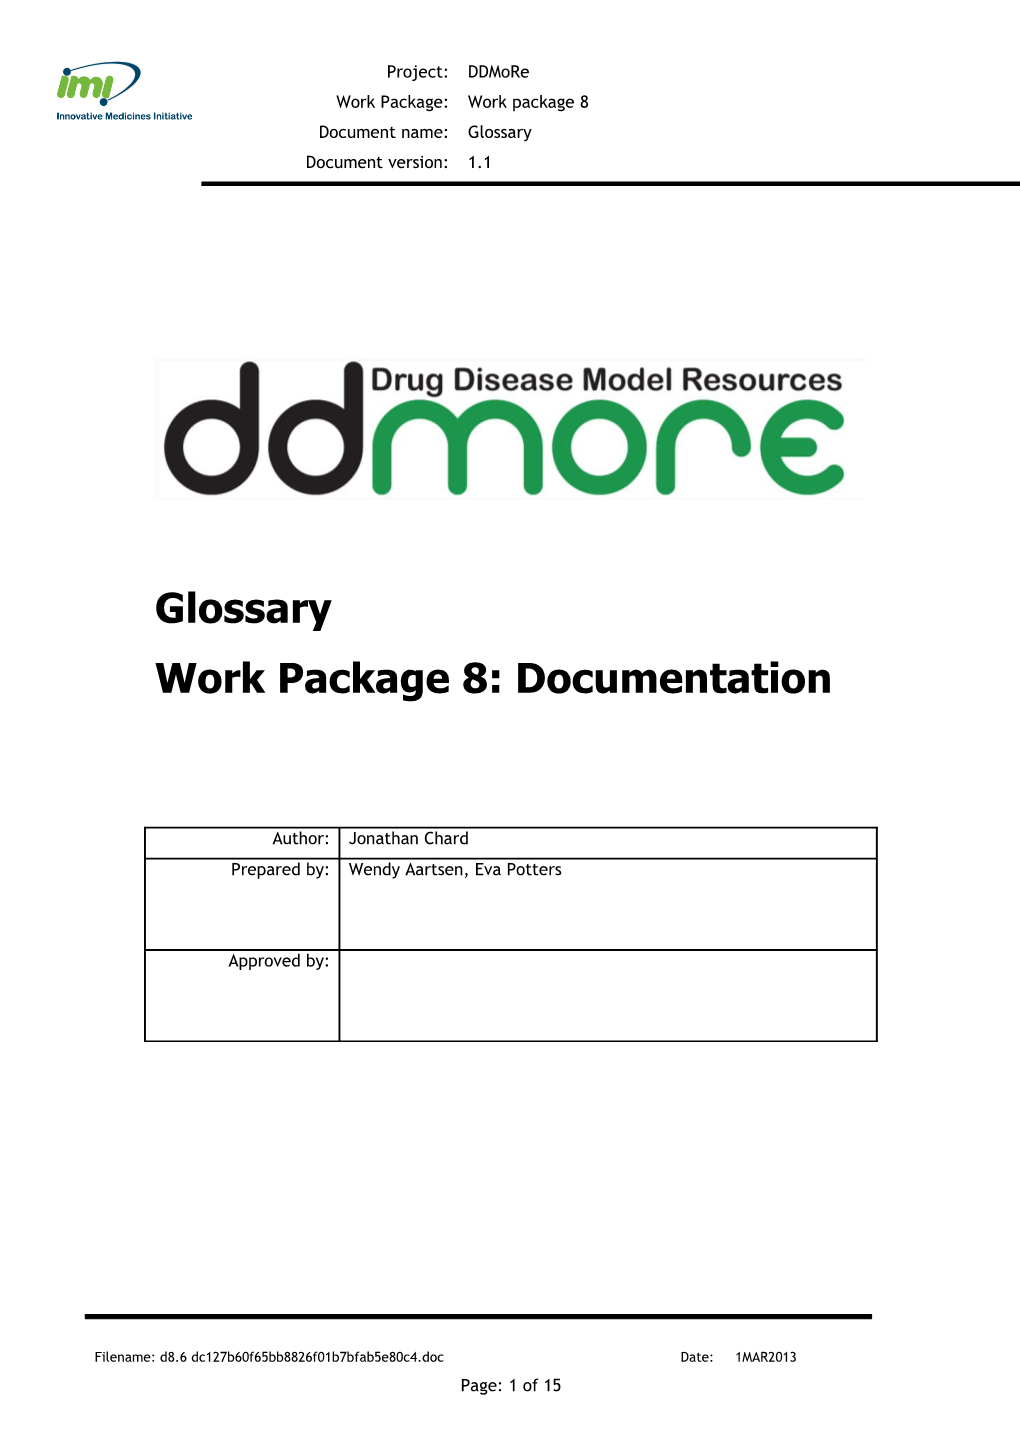 Work Package 8: Documentation